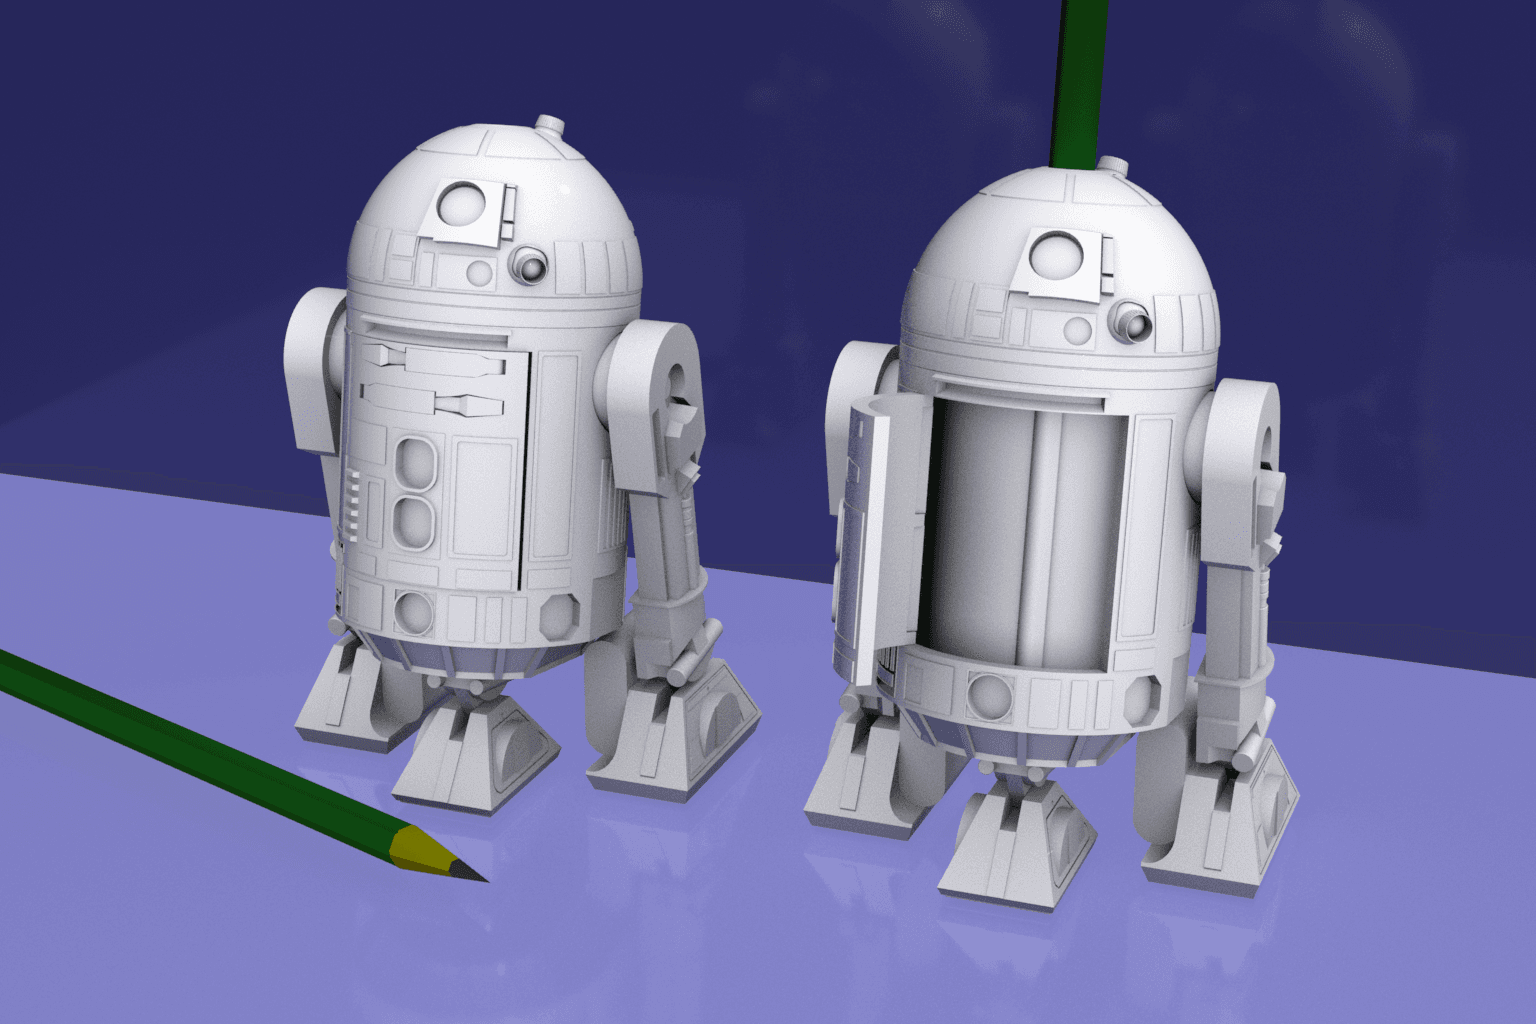 R2-D2 Anspitzer-Spicker 3d model